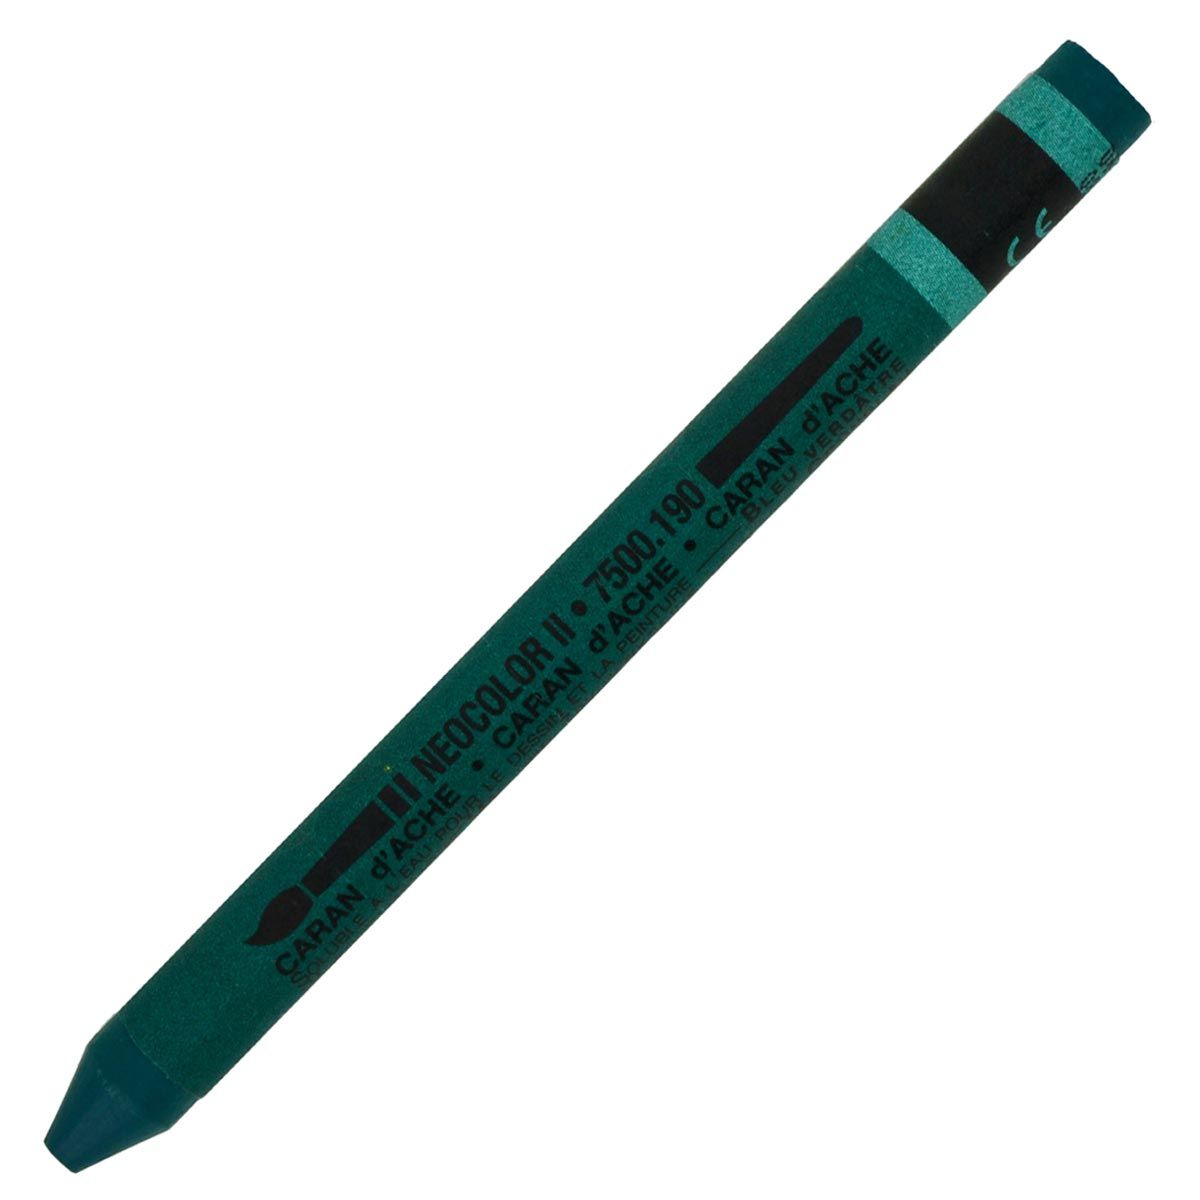 Neocolor II Aquarelle Artists’ Crayon - Greenish Blue 190